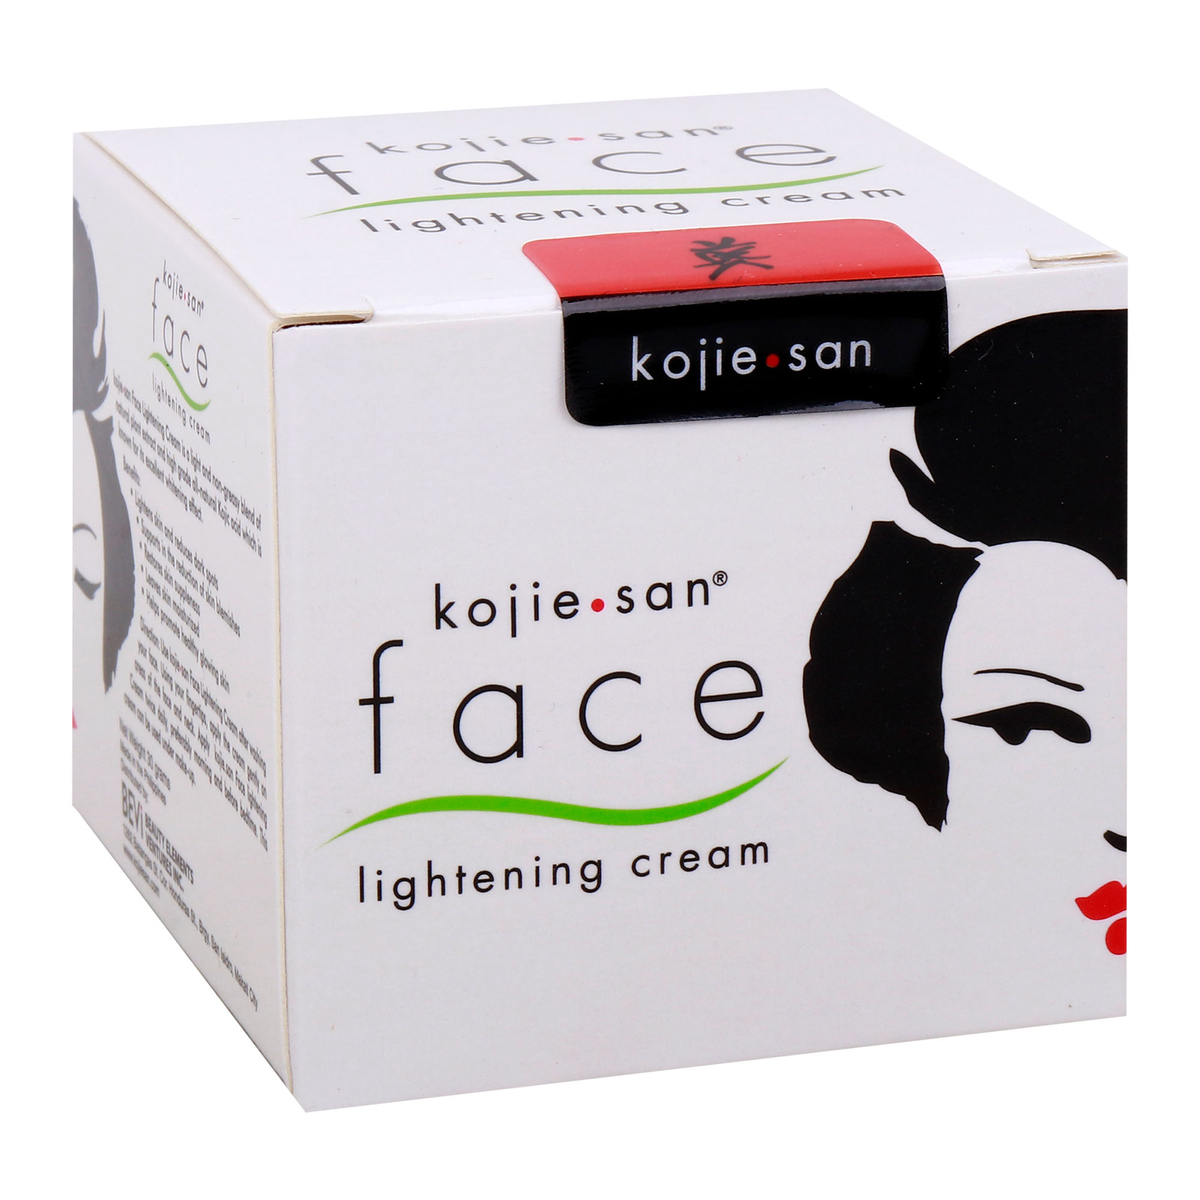 Kojie San Face Lightening Cream, 30 g